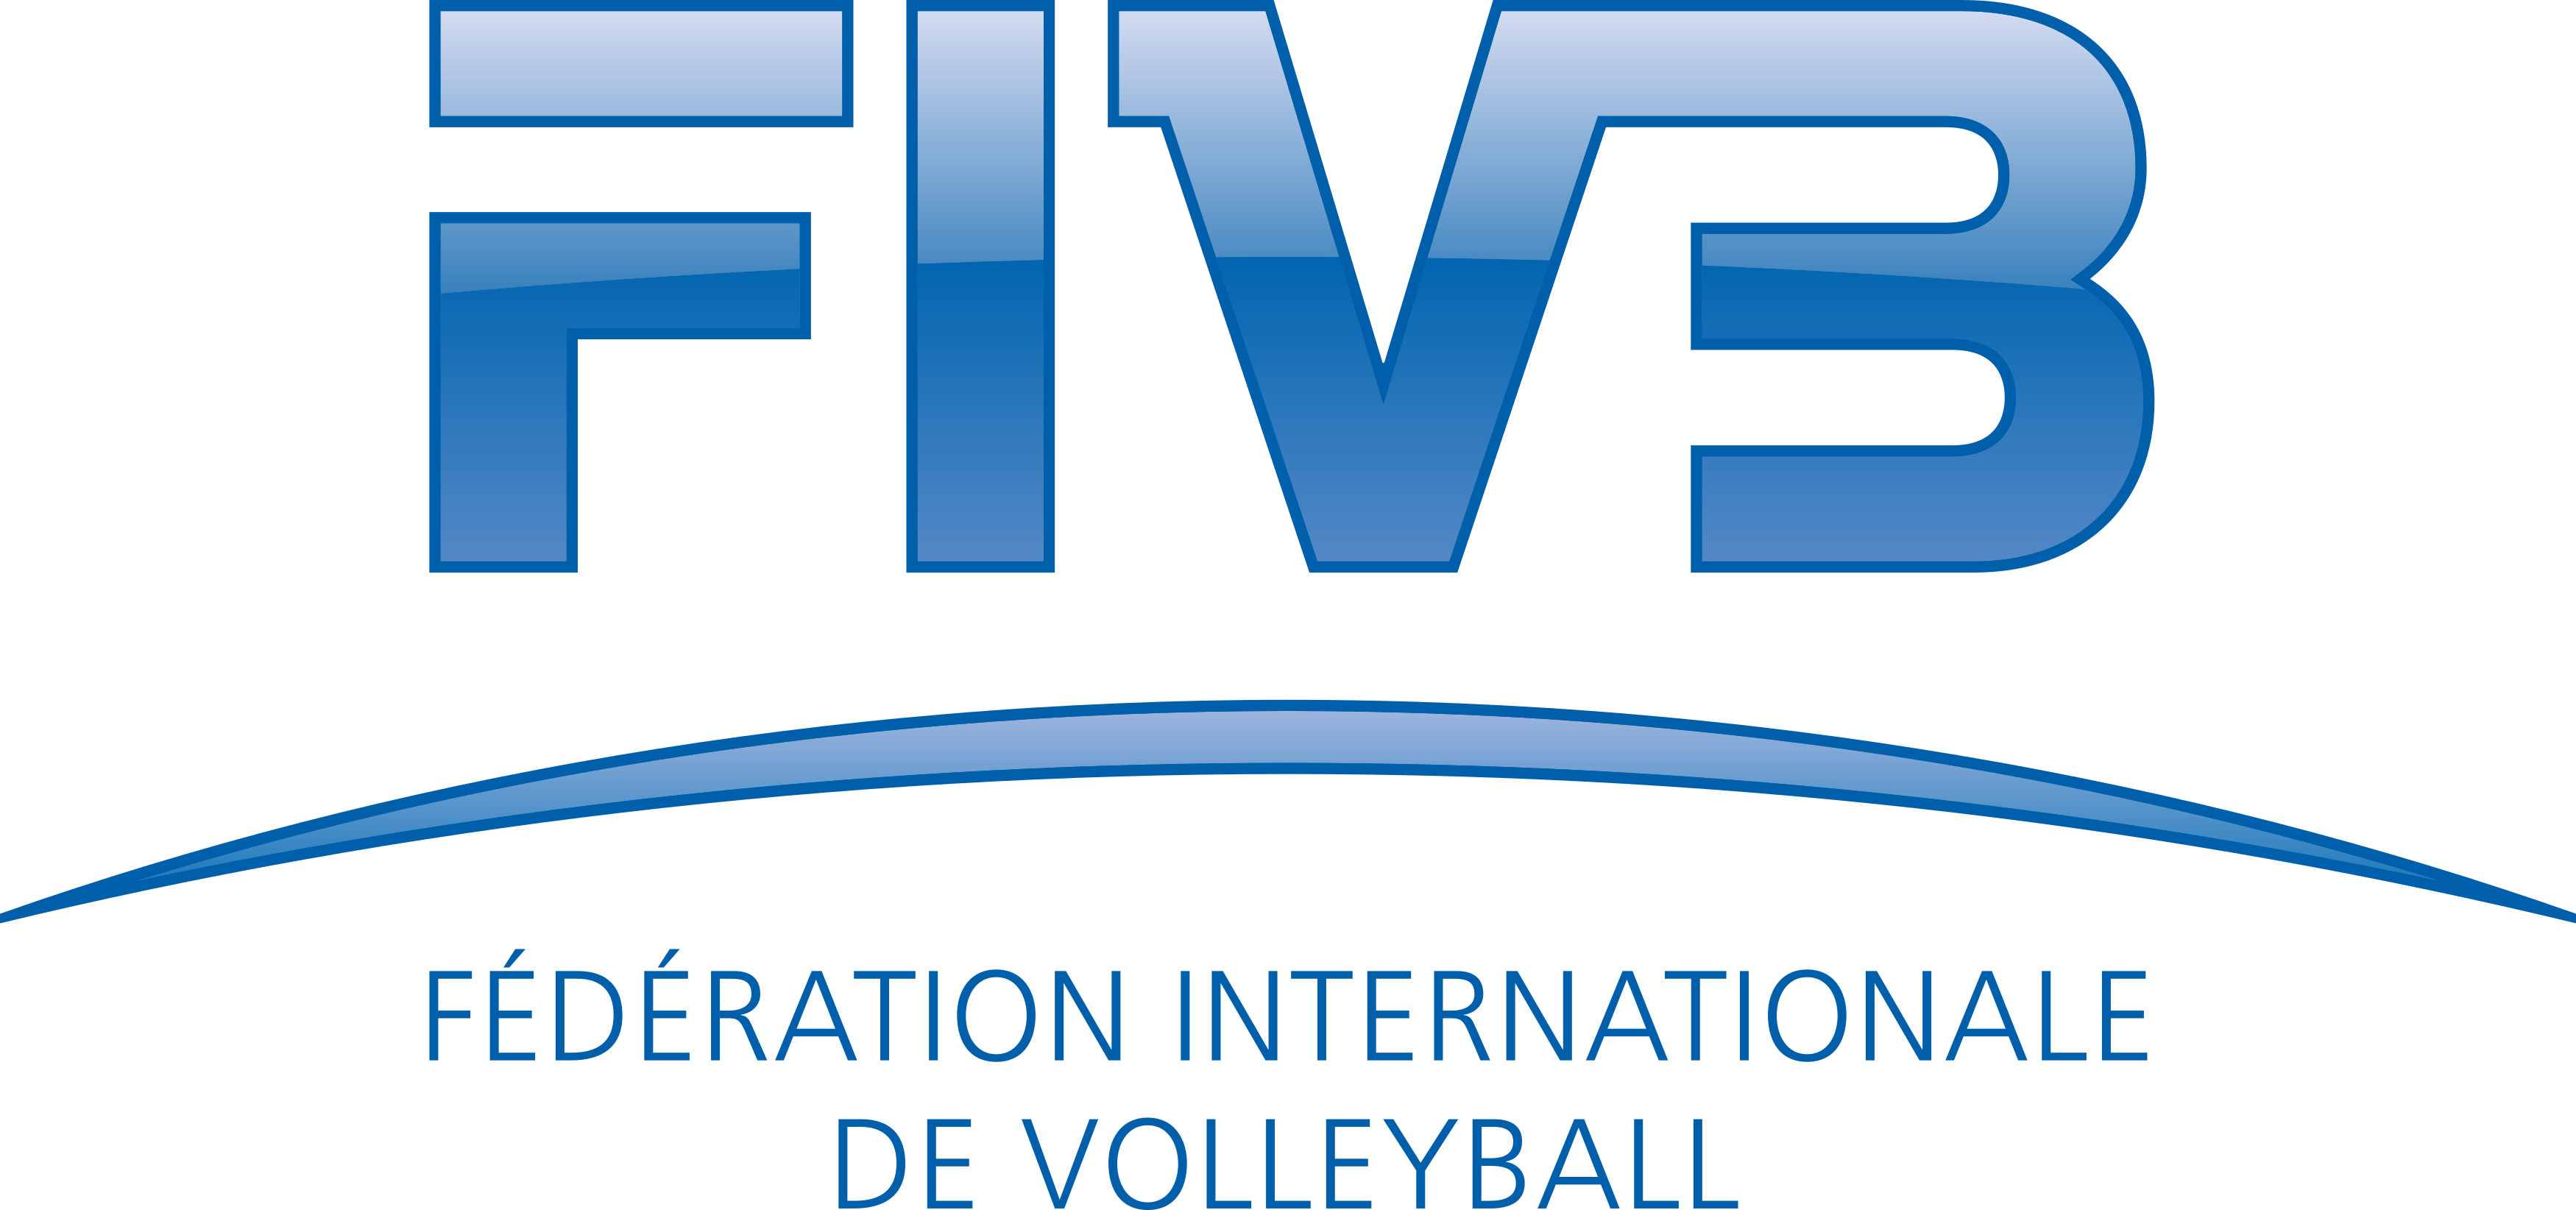 FIVB Logo.